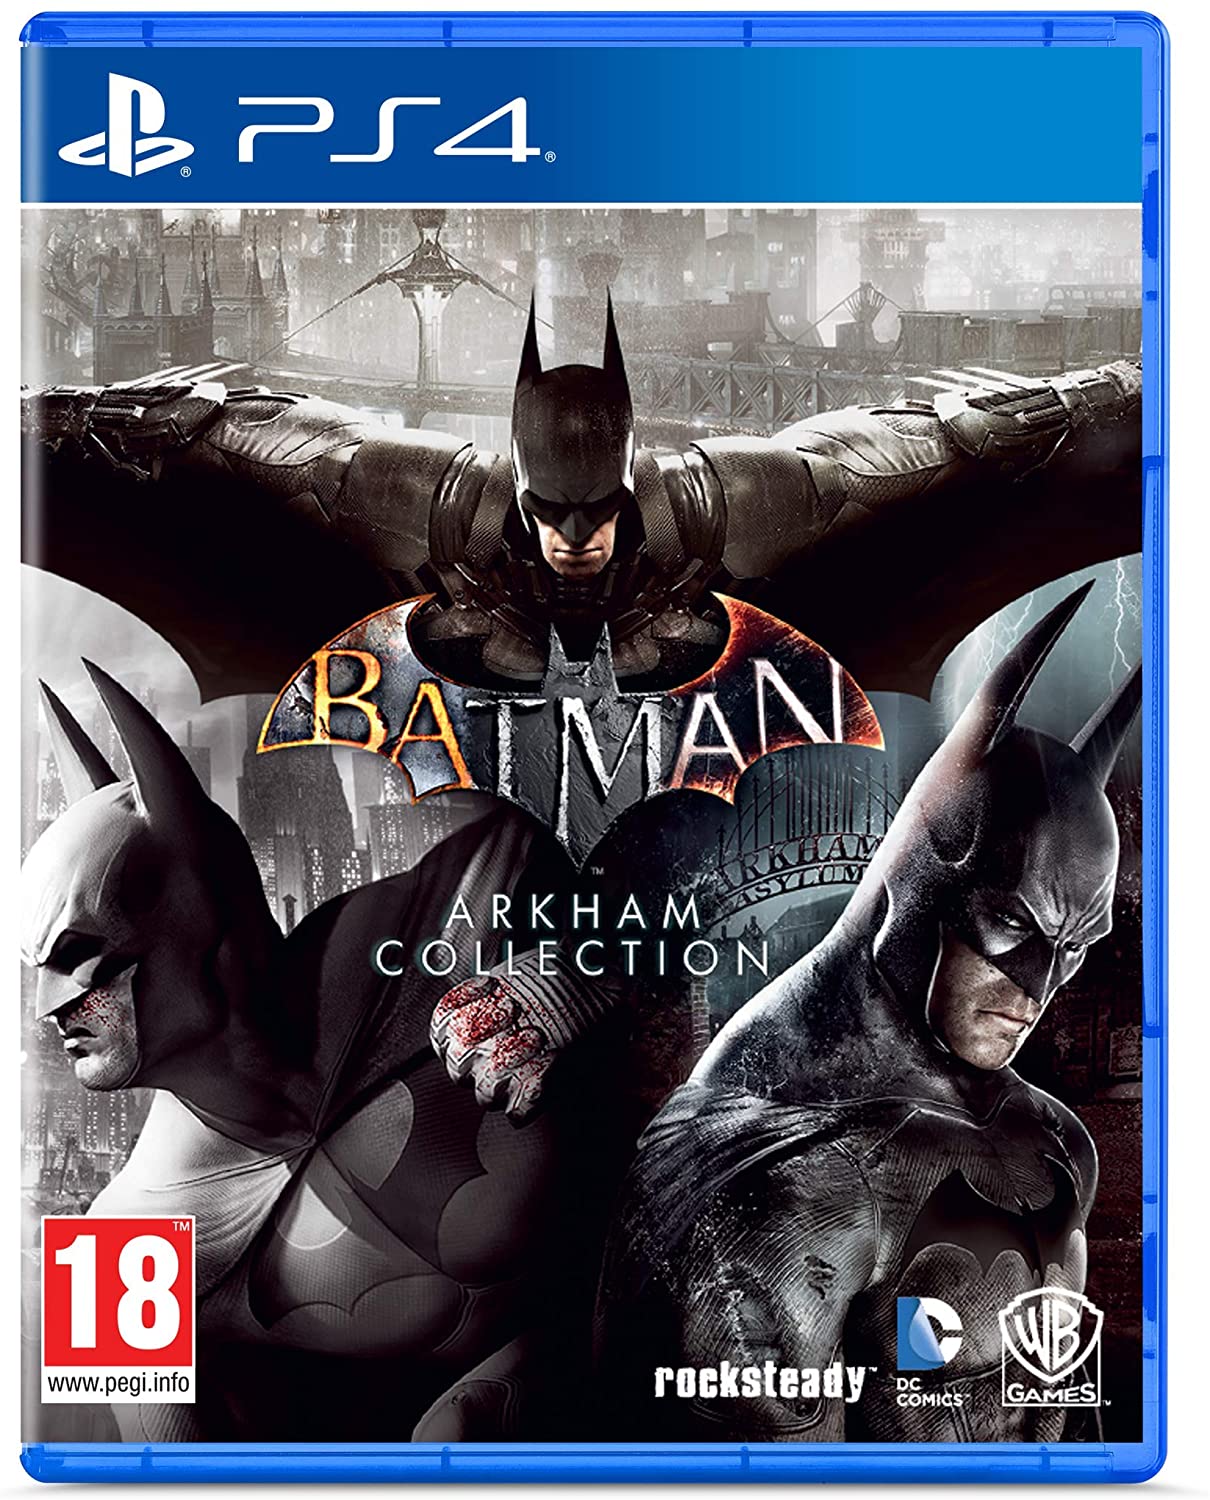 Batman Arkham Collection Video Game (PS4)